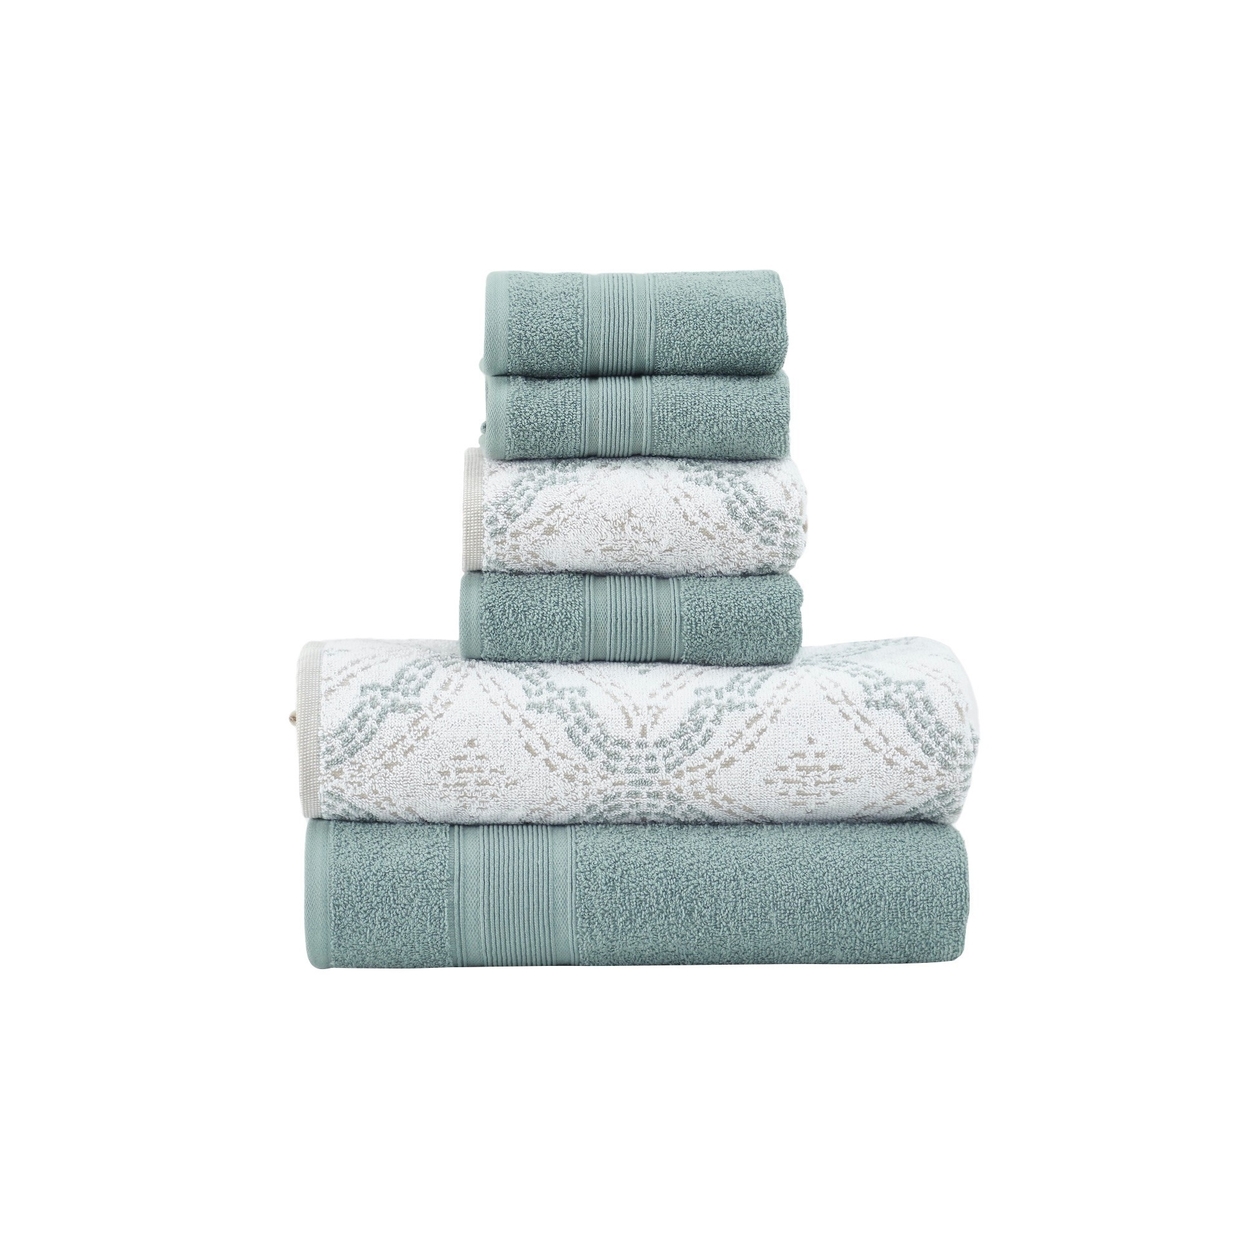 Oya 6pc Cotton Towel Set, Quatrefoil, White, Light Gray By The Urban Port- Saltoro Sherpi